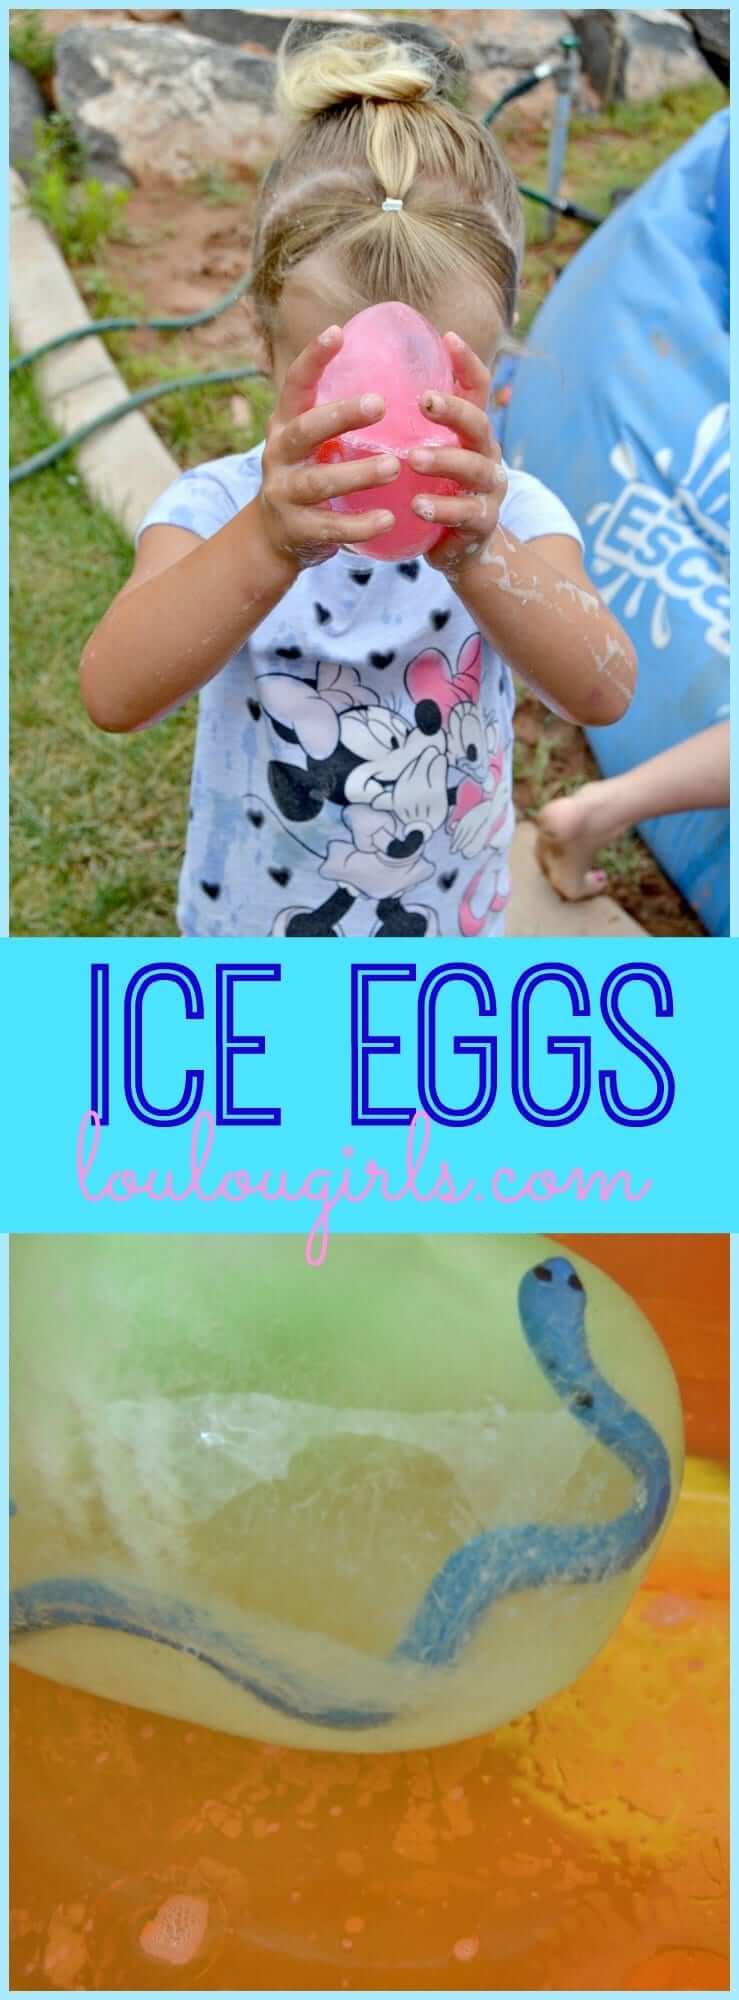 Ice- egg-summer-fun